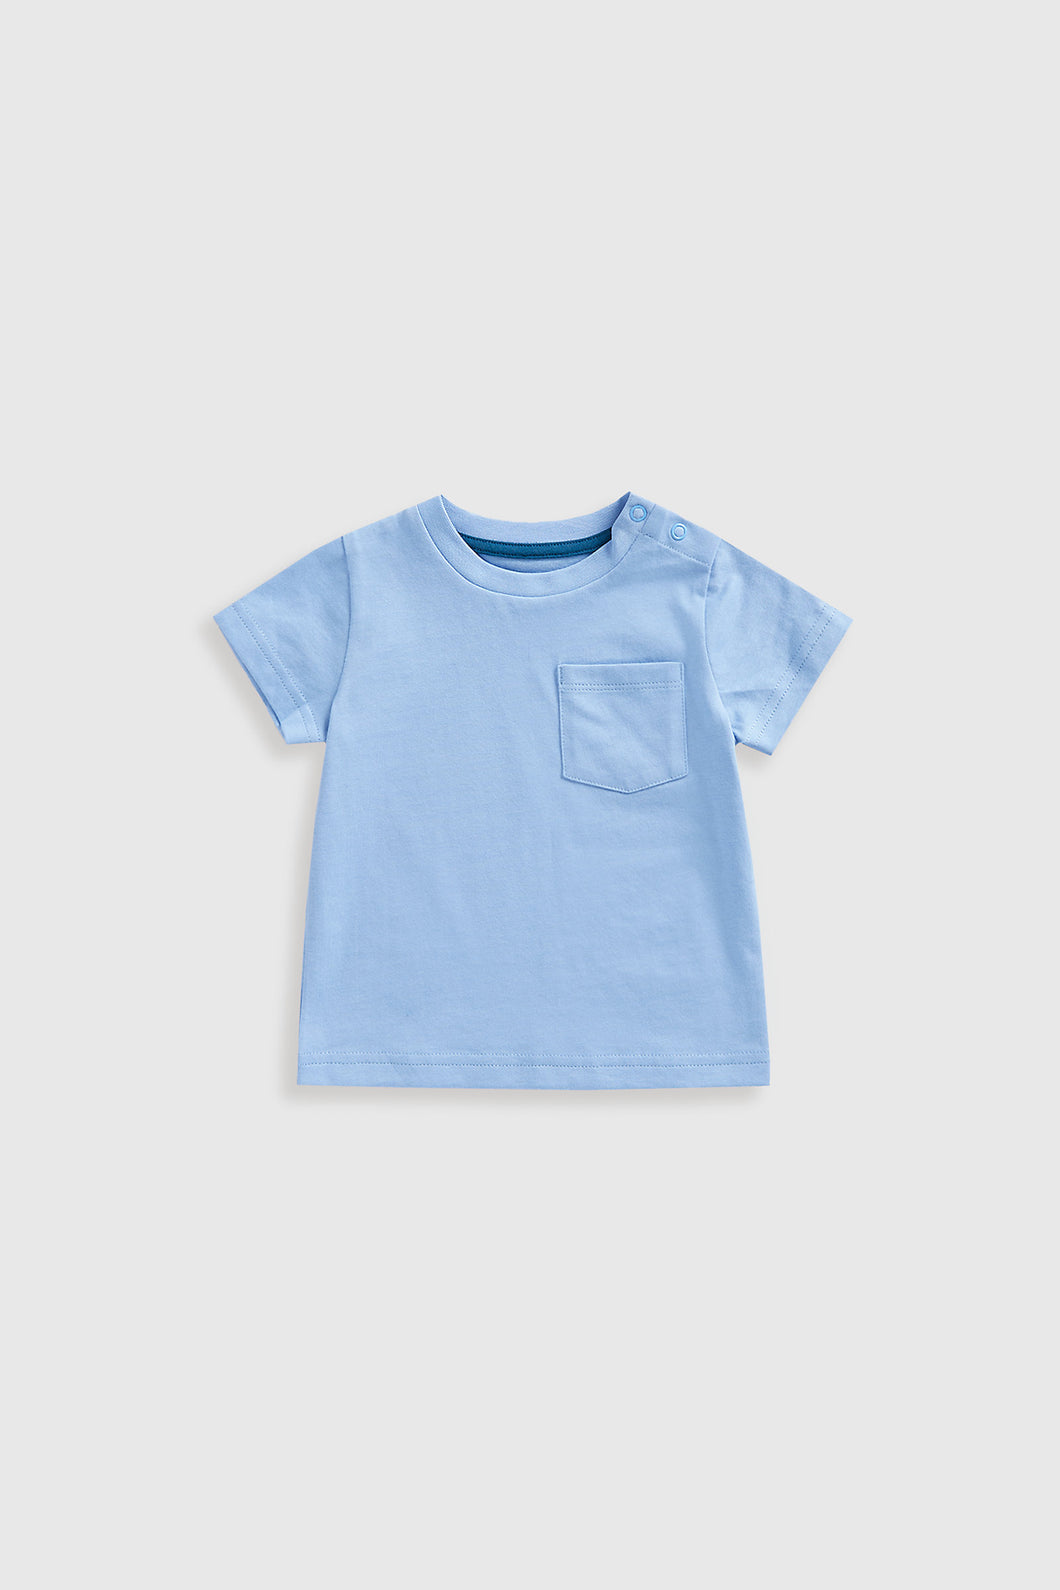 Mothercare Blue T-Shirt